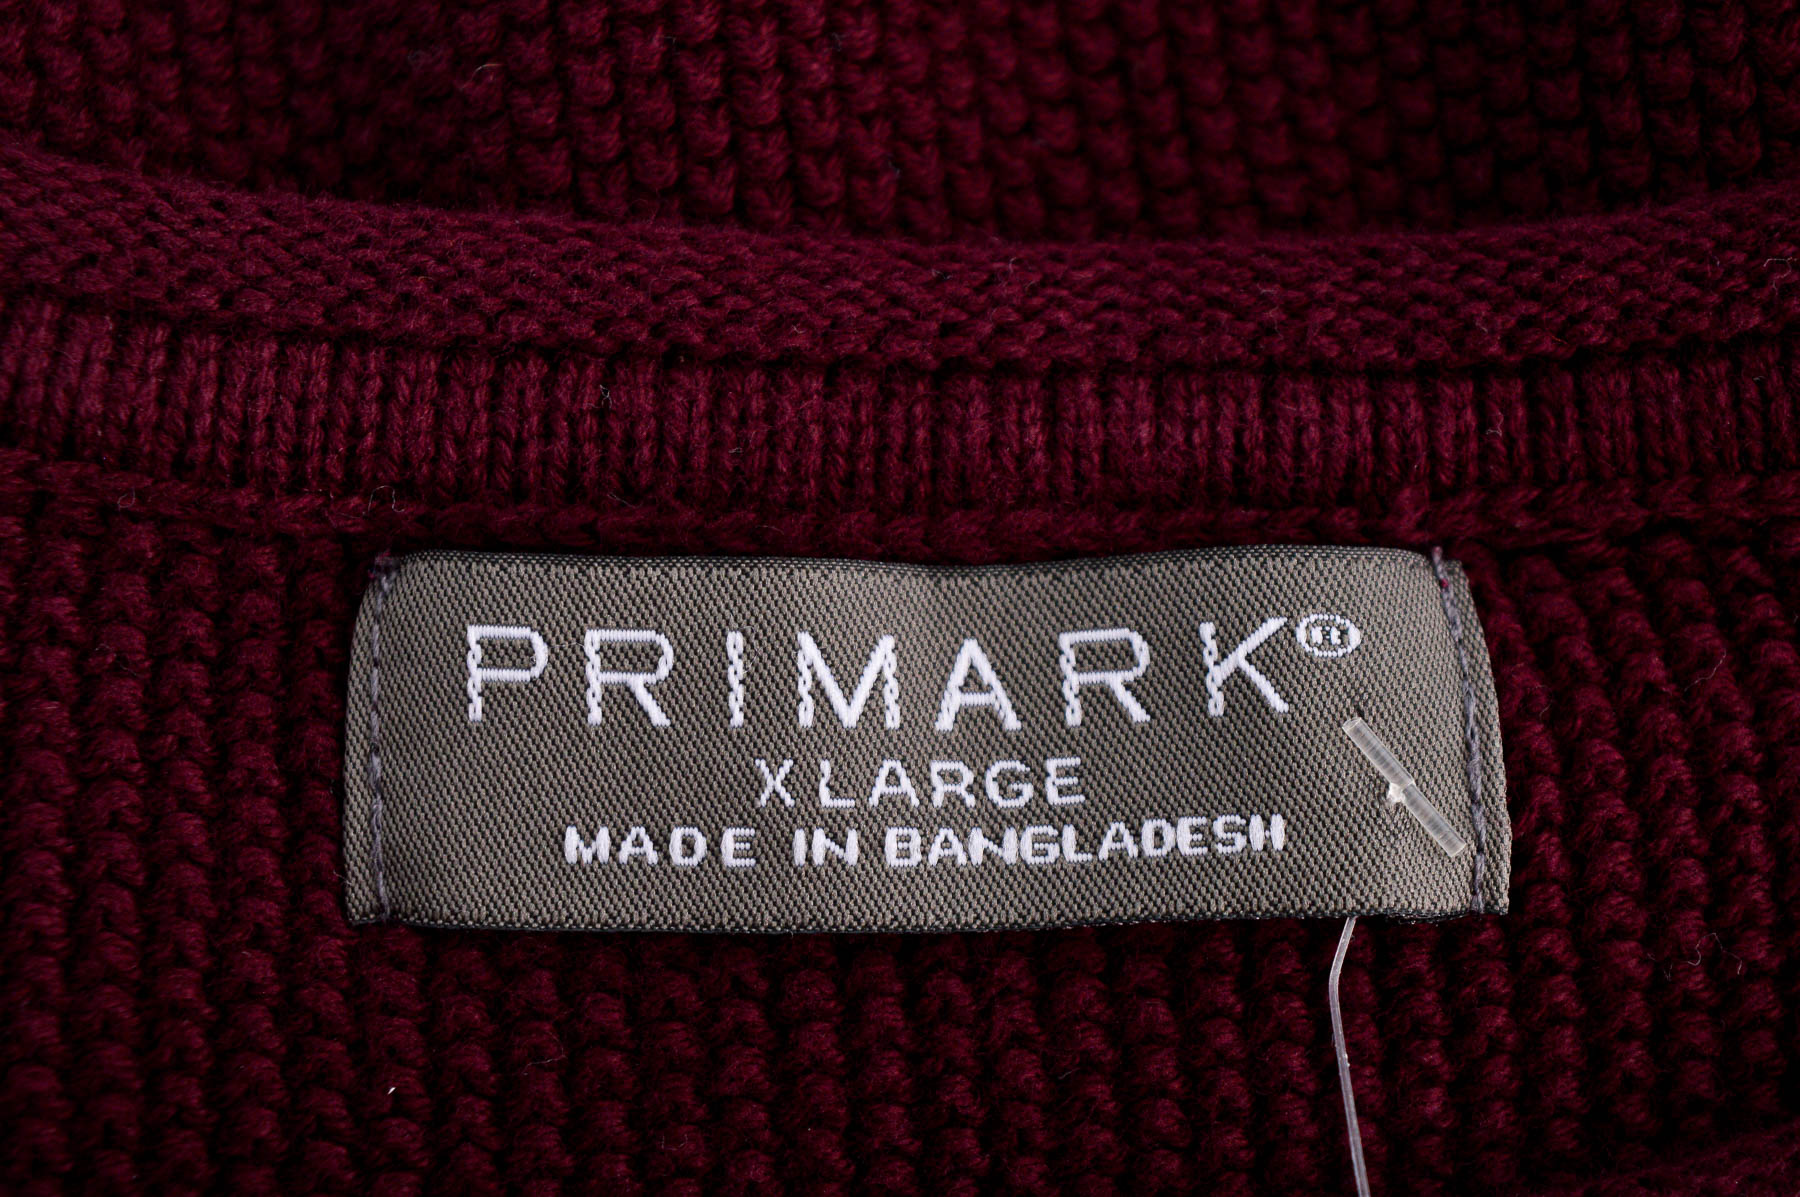 Мъжки пуловер - PRIMARK - 2